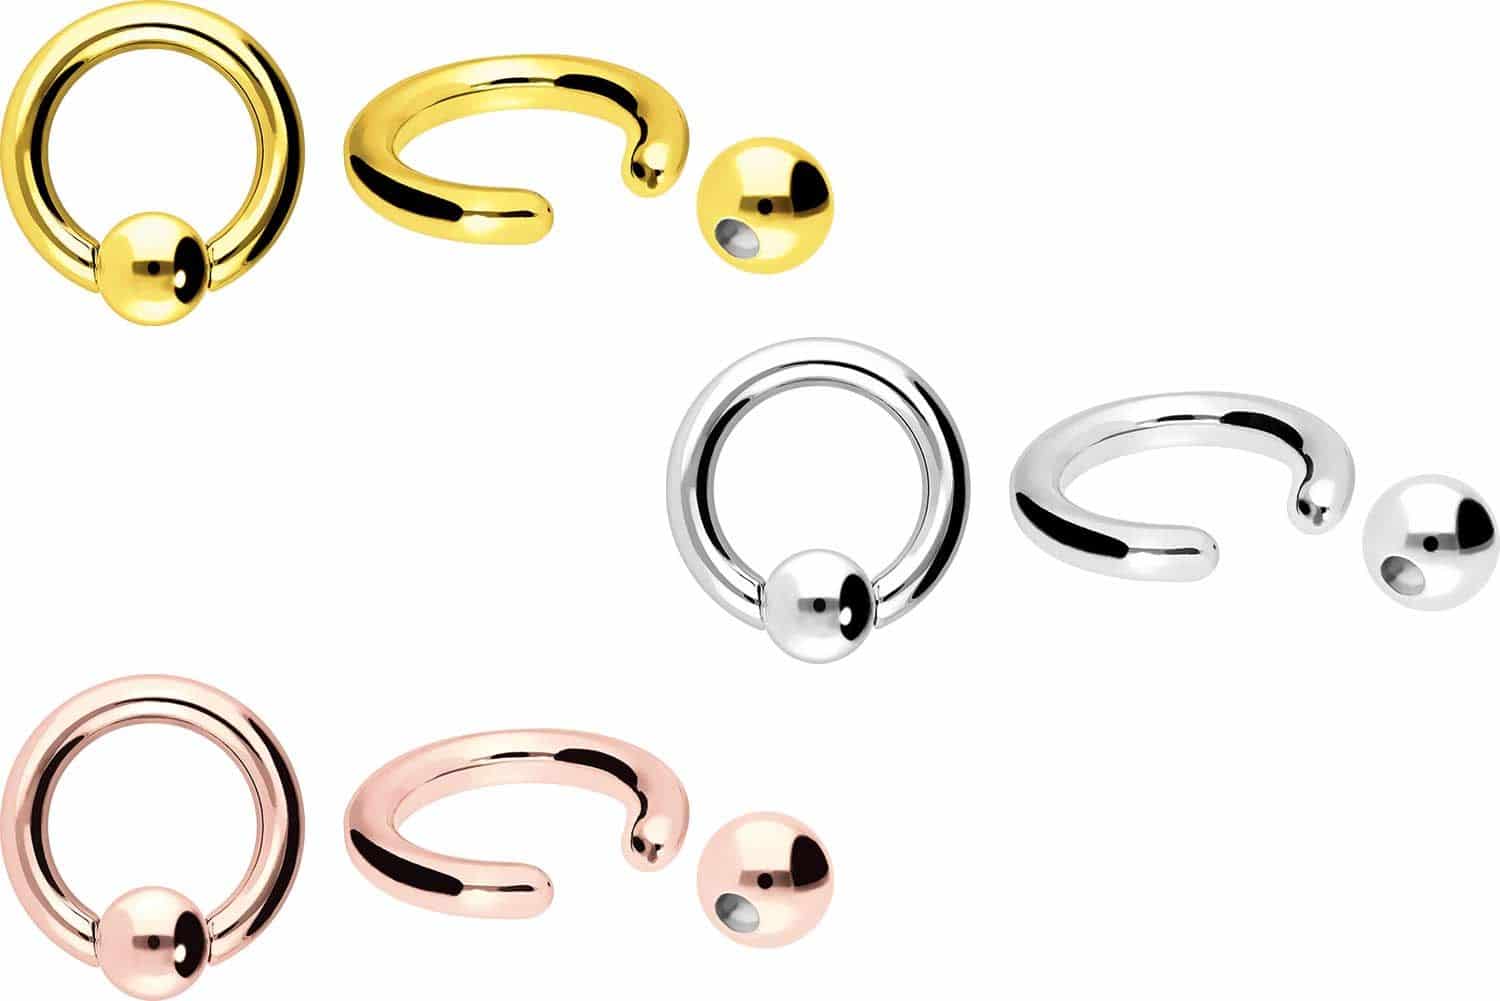 18 carat gold ball closure ring